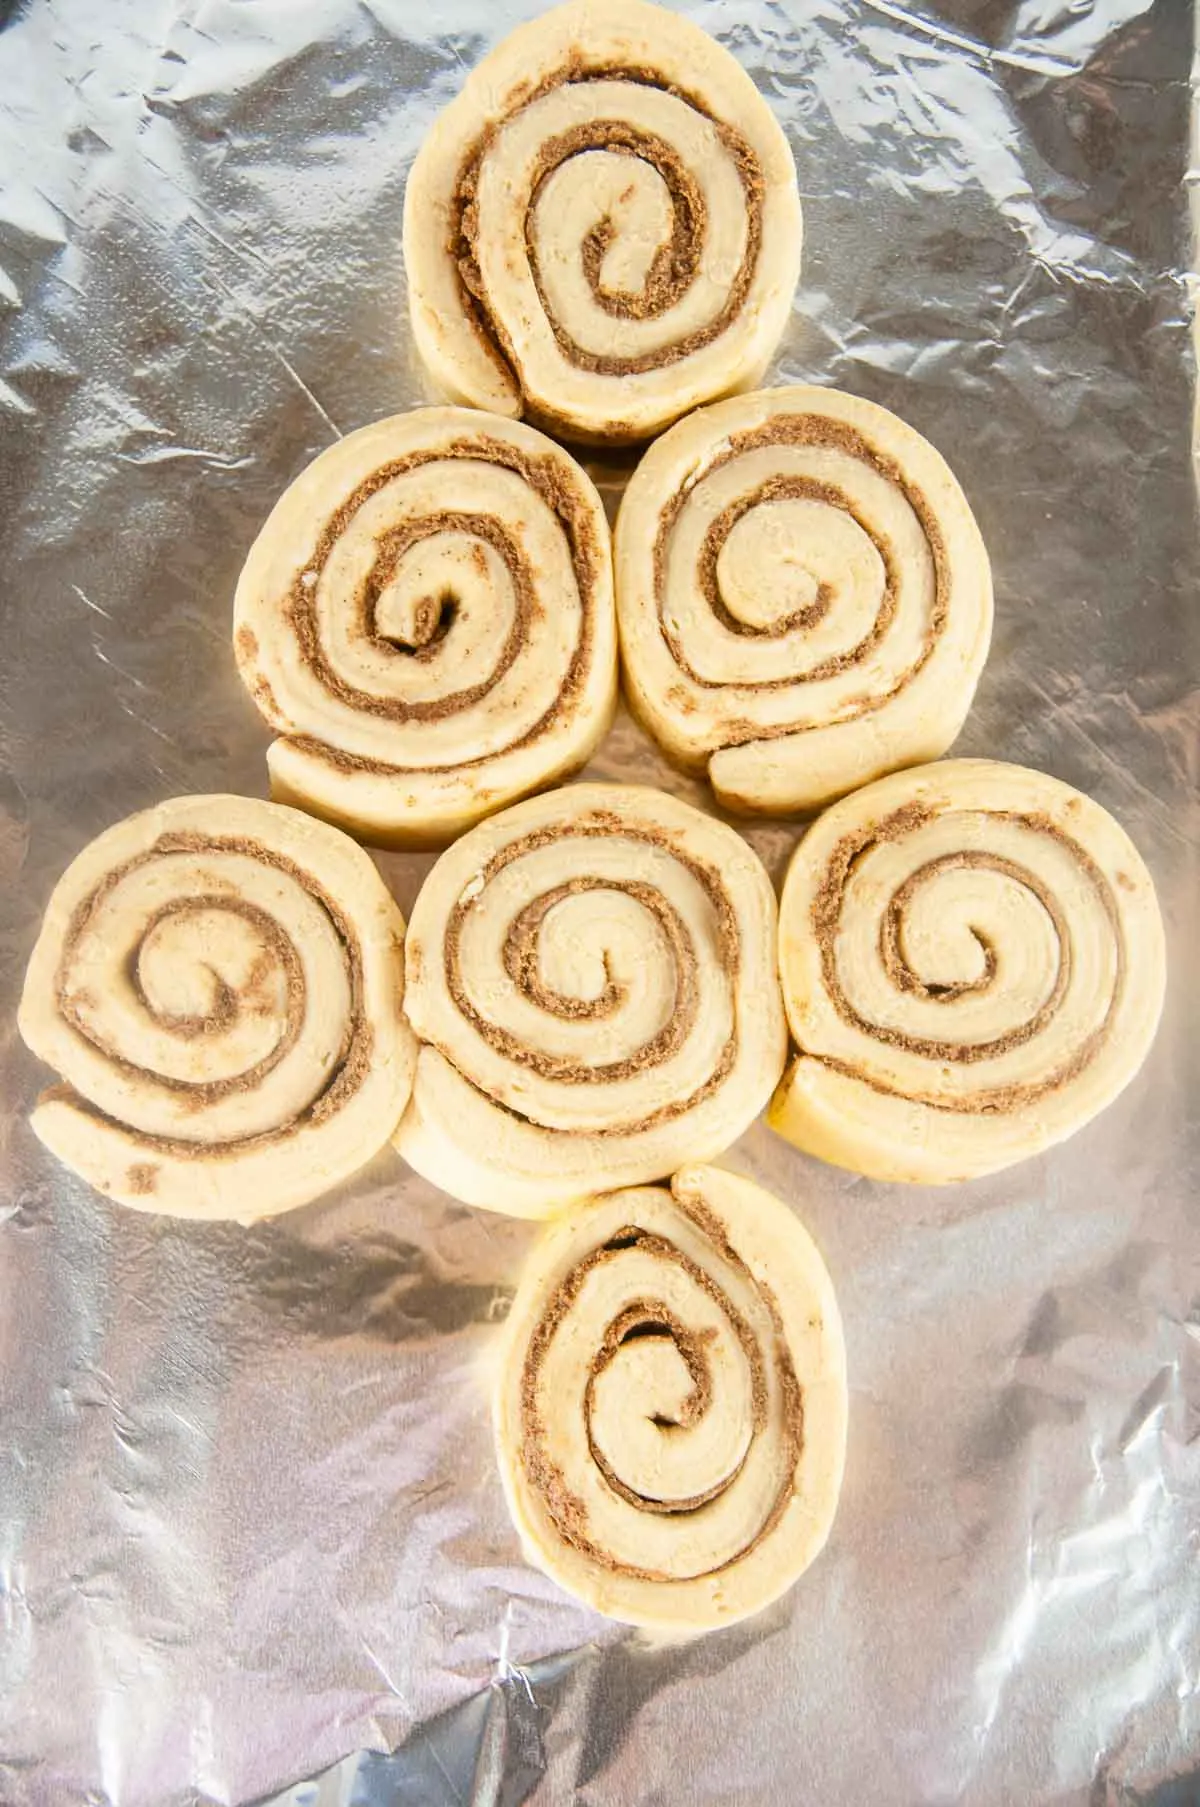 Arrange the cinnamon rolls on a baking sheet to look like a Christmas tree.